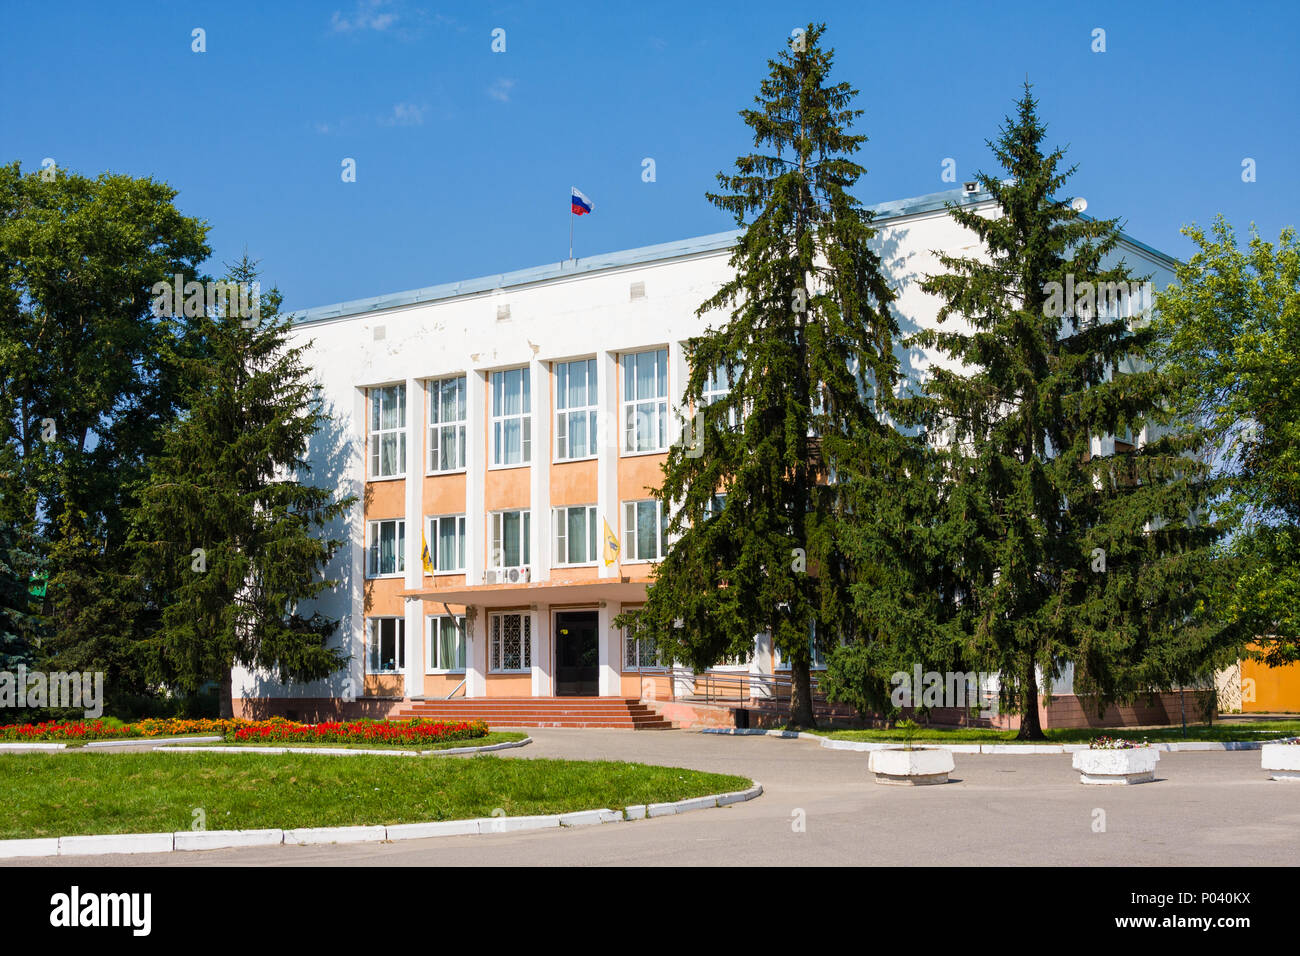 Pereslavl-Zalessky, Russia — August 20, 2017: City Administration Building in Pereslavl-Zalessky, Yaroslavskaya region Stock Photo